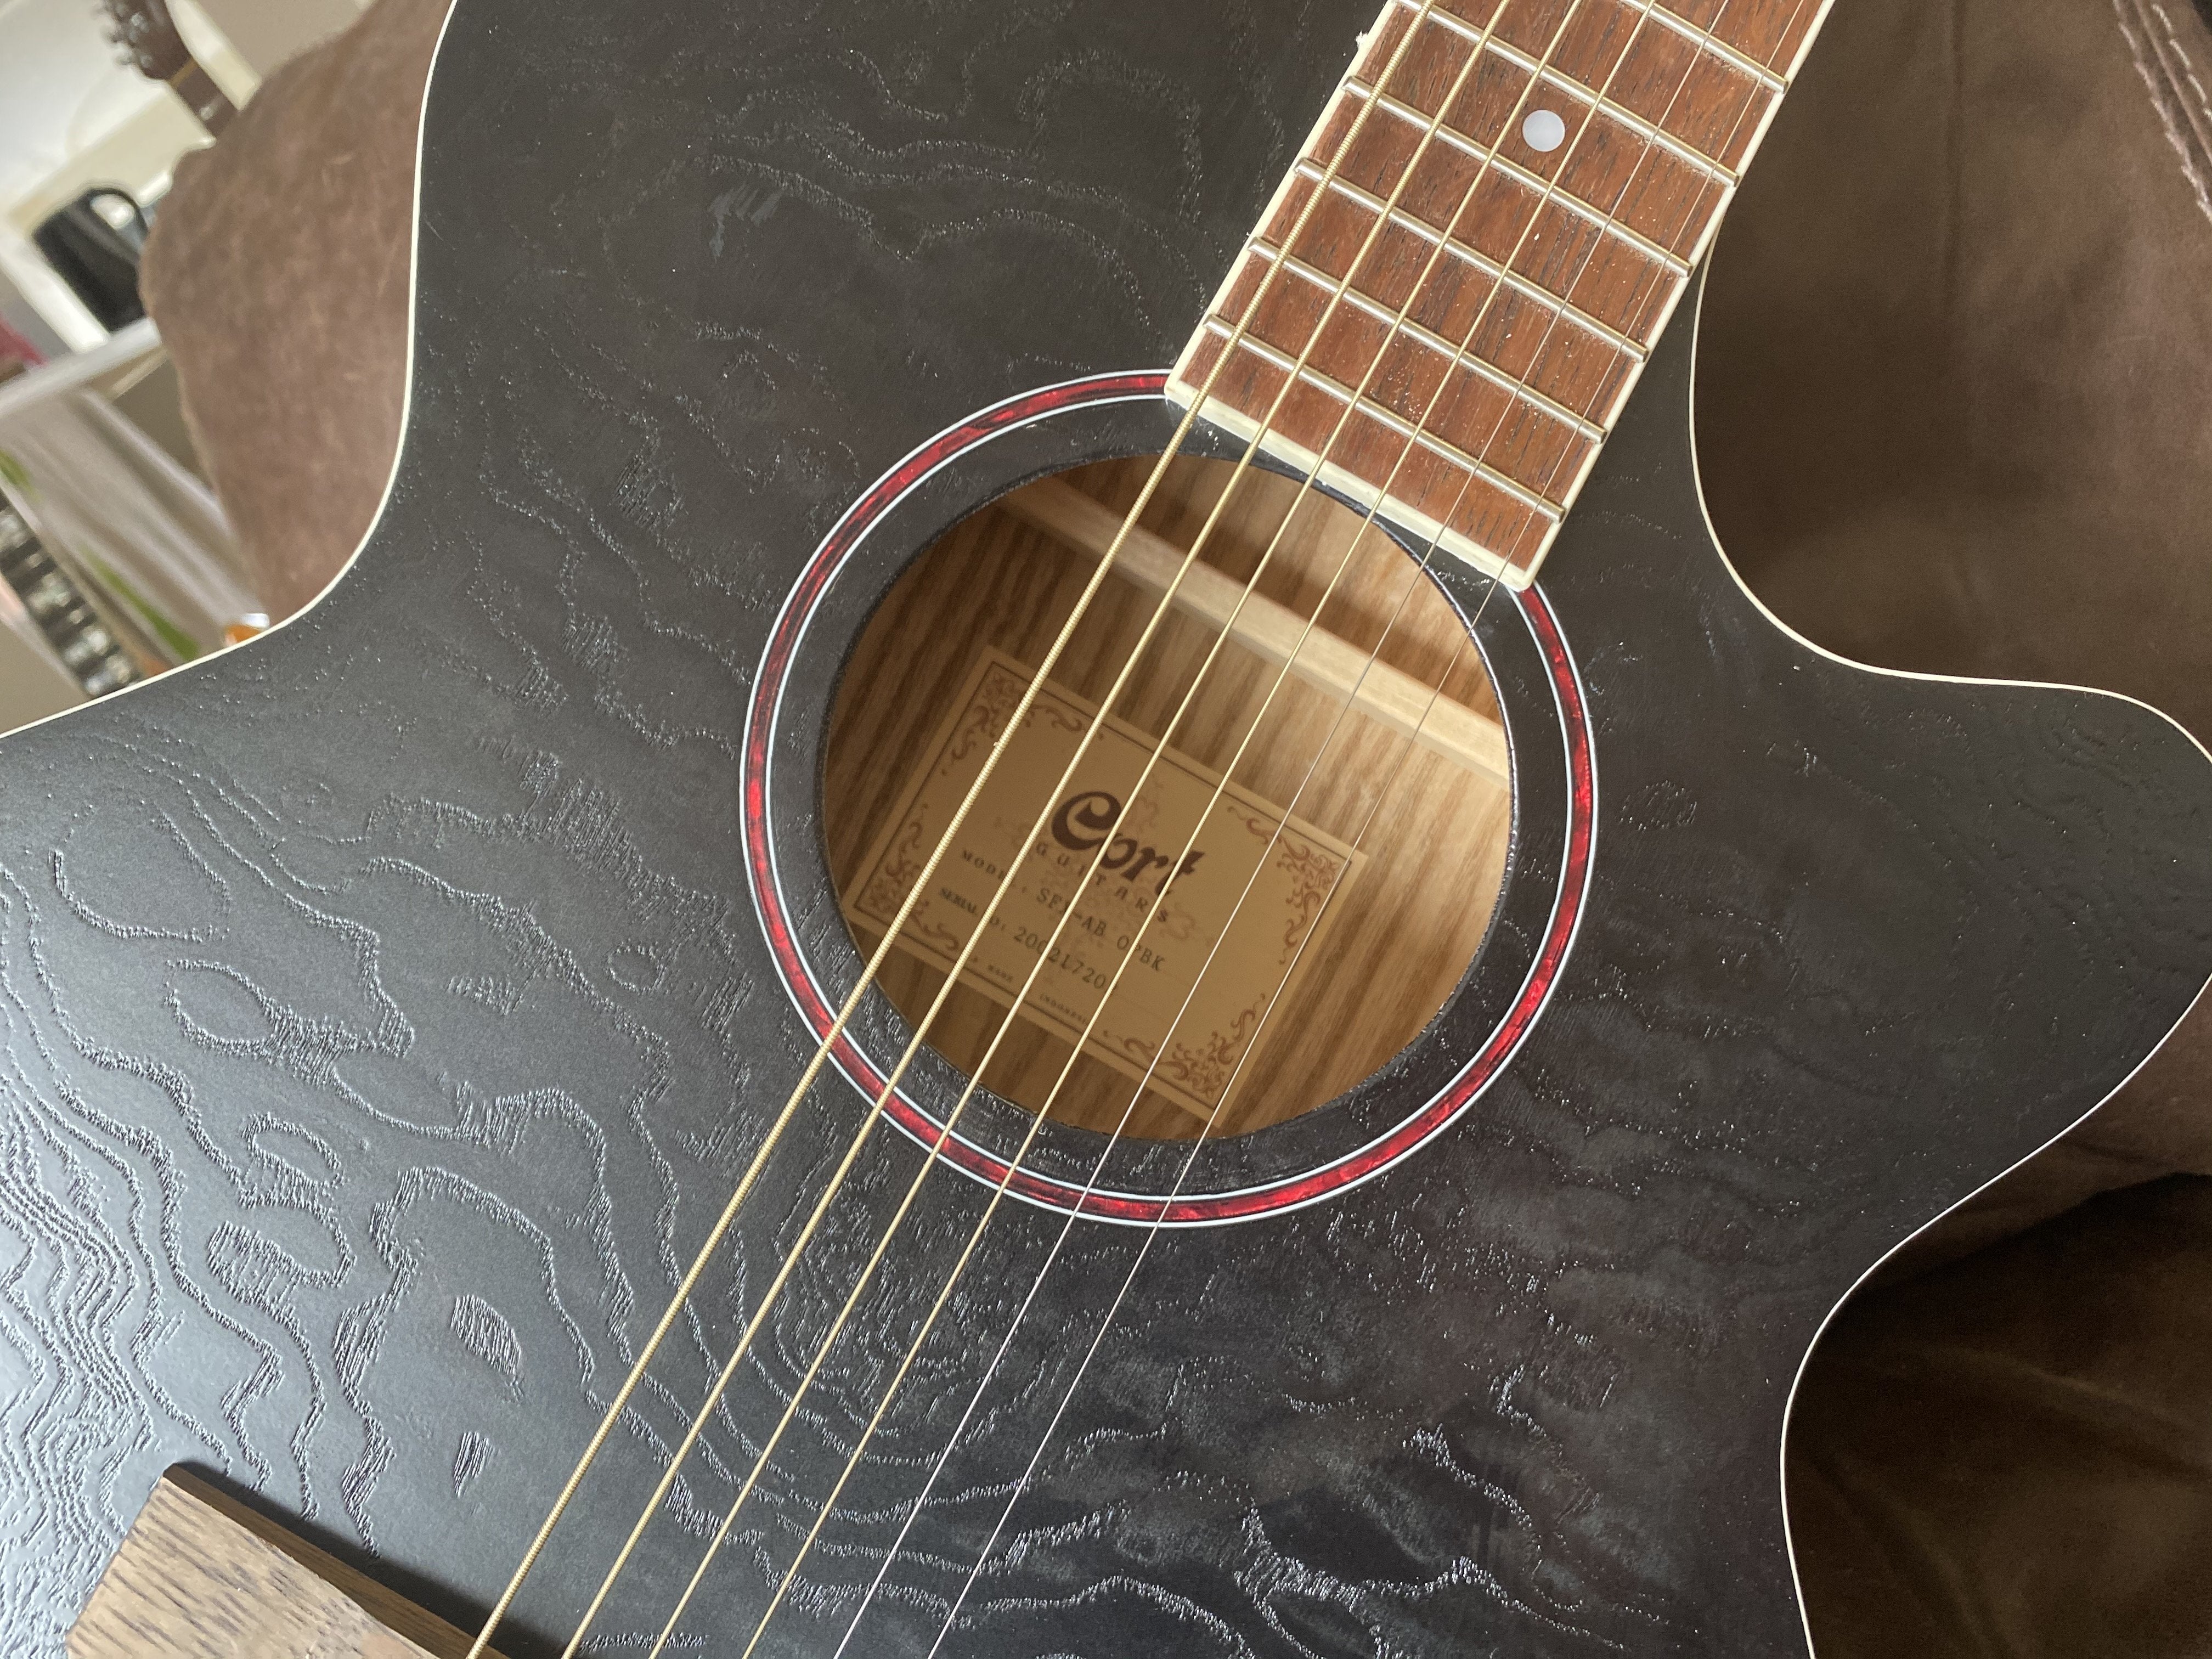 Cort SFX-AB-OP-BK Electro-acoustic Black Satin, Electro Acoustic Guitar for sale at Richards Guitars.